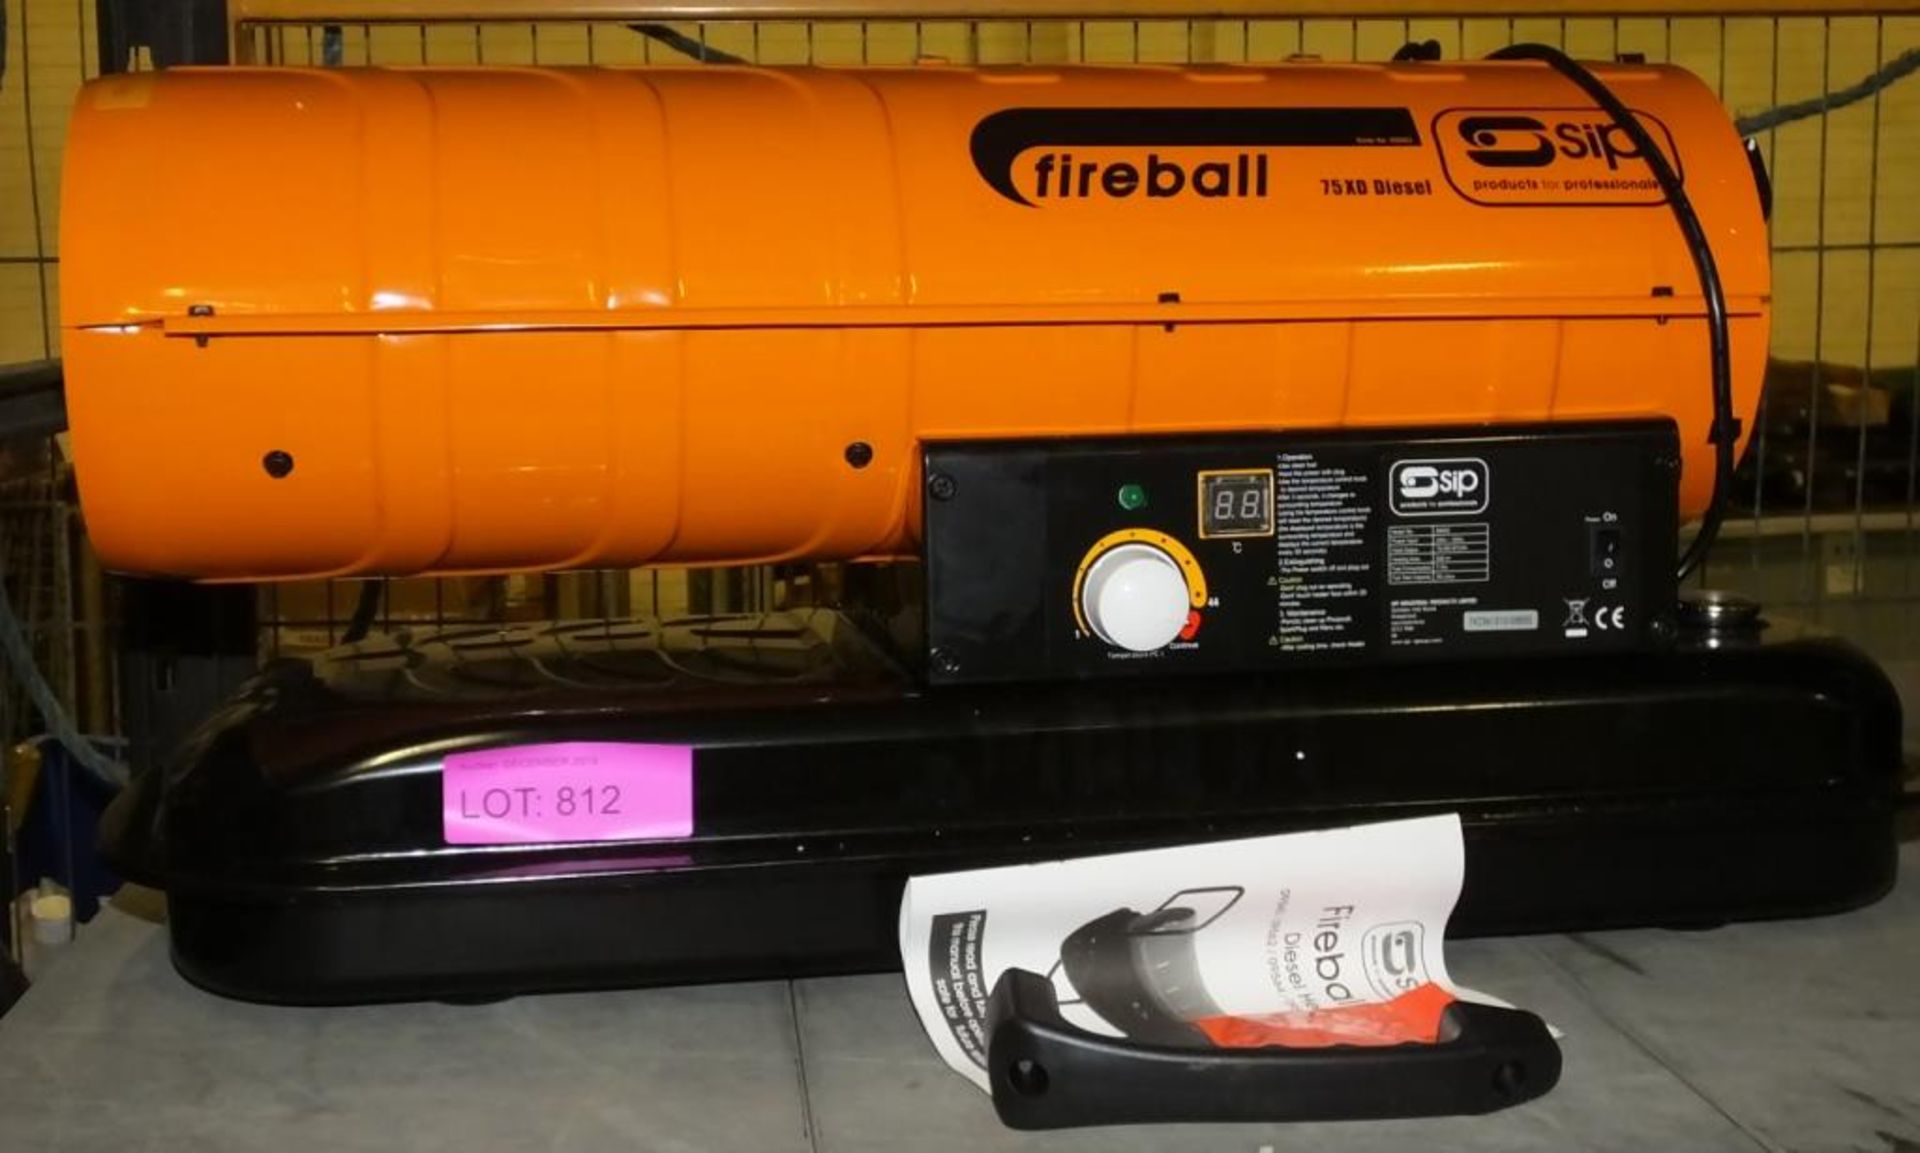 Sip Fireball XD 09562 Diesel Powered - Space Heater